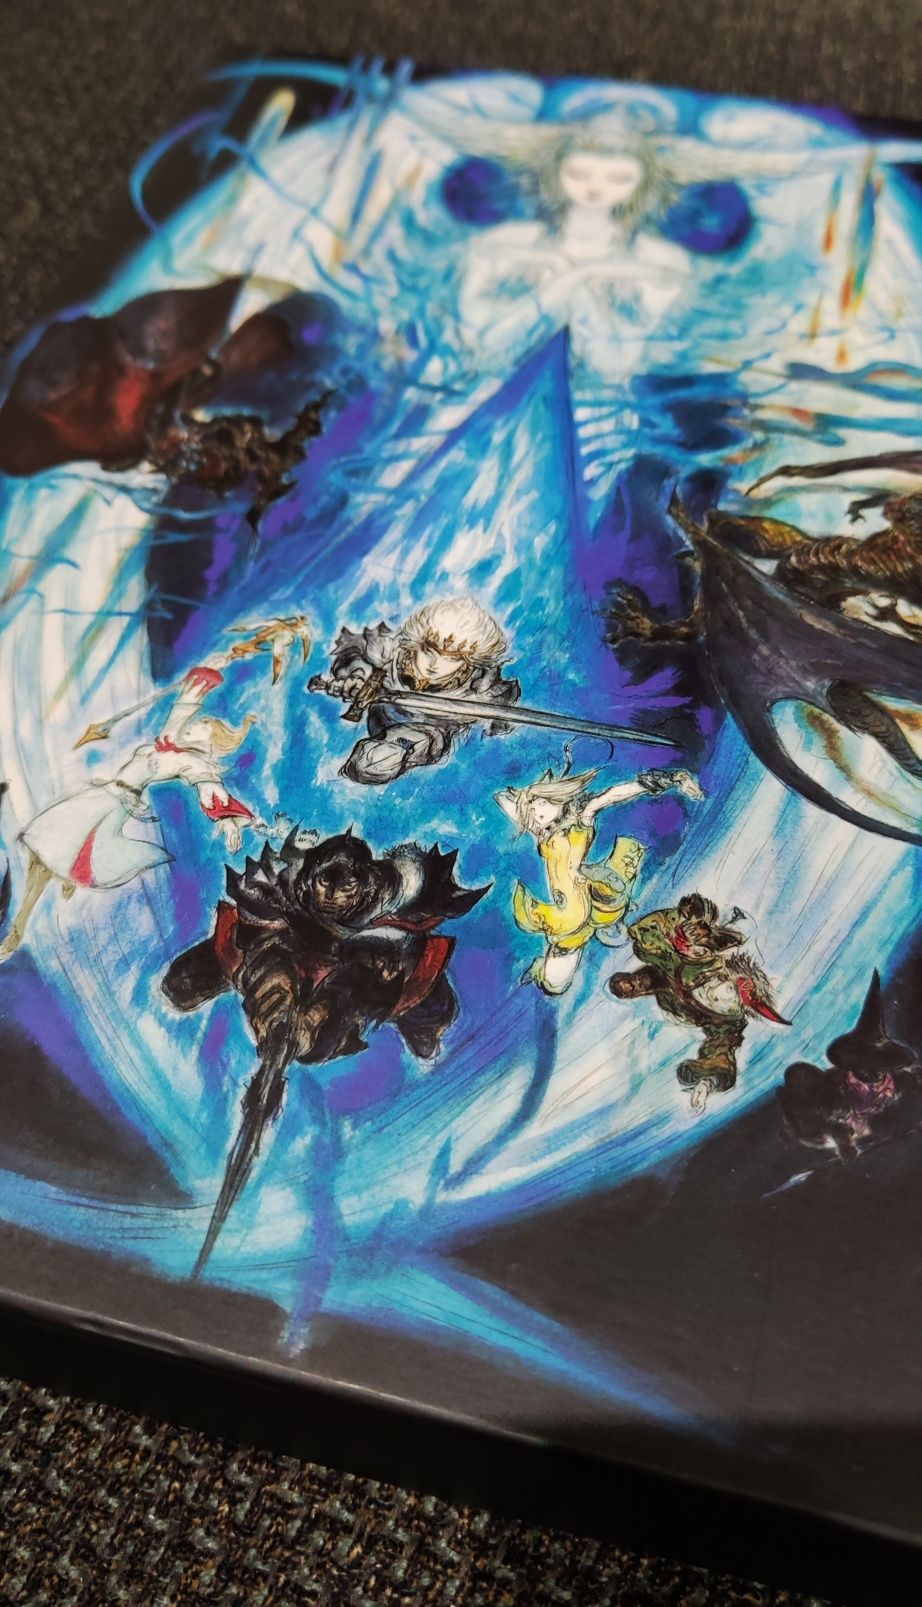 Final Fantasy XIV: A Realm Reborn Collectors Edition